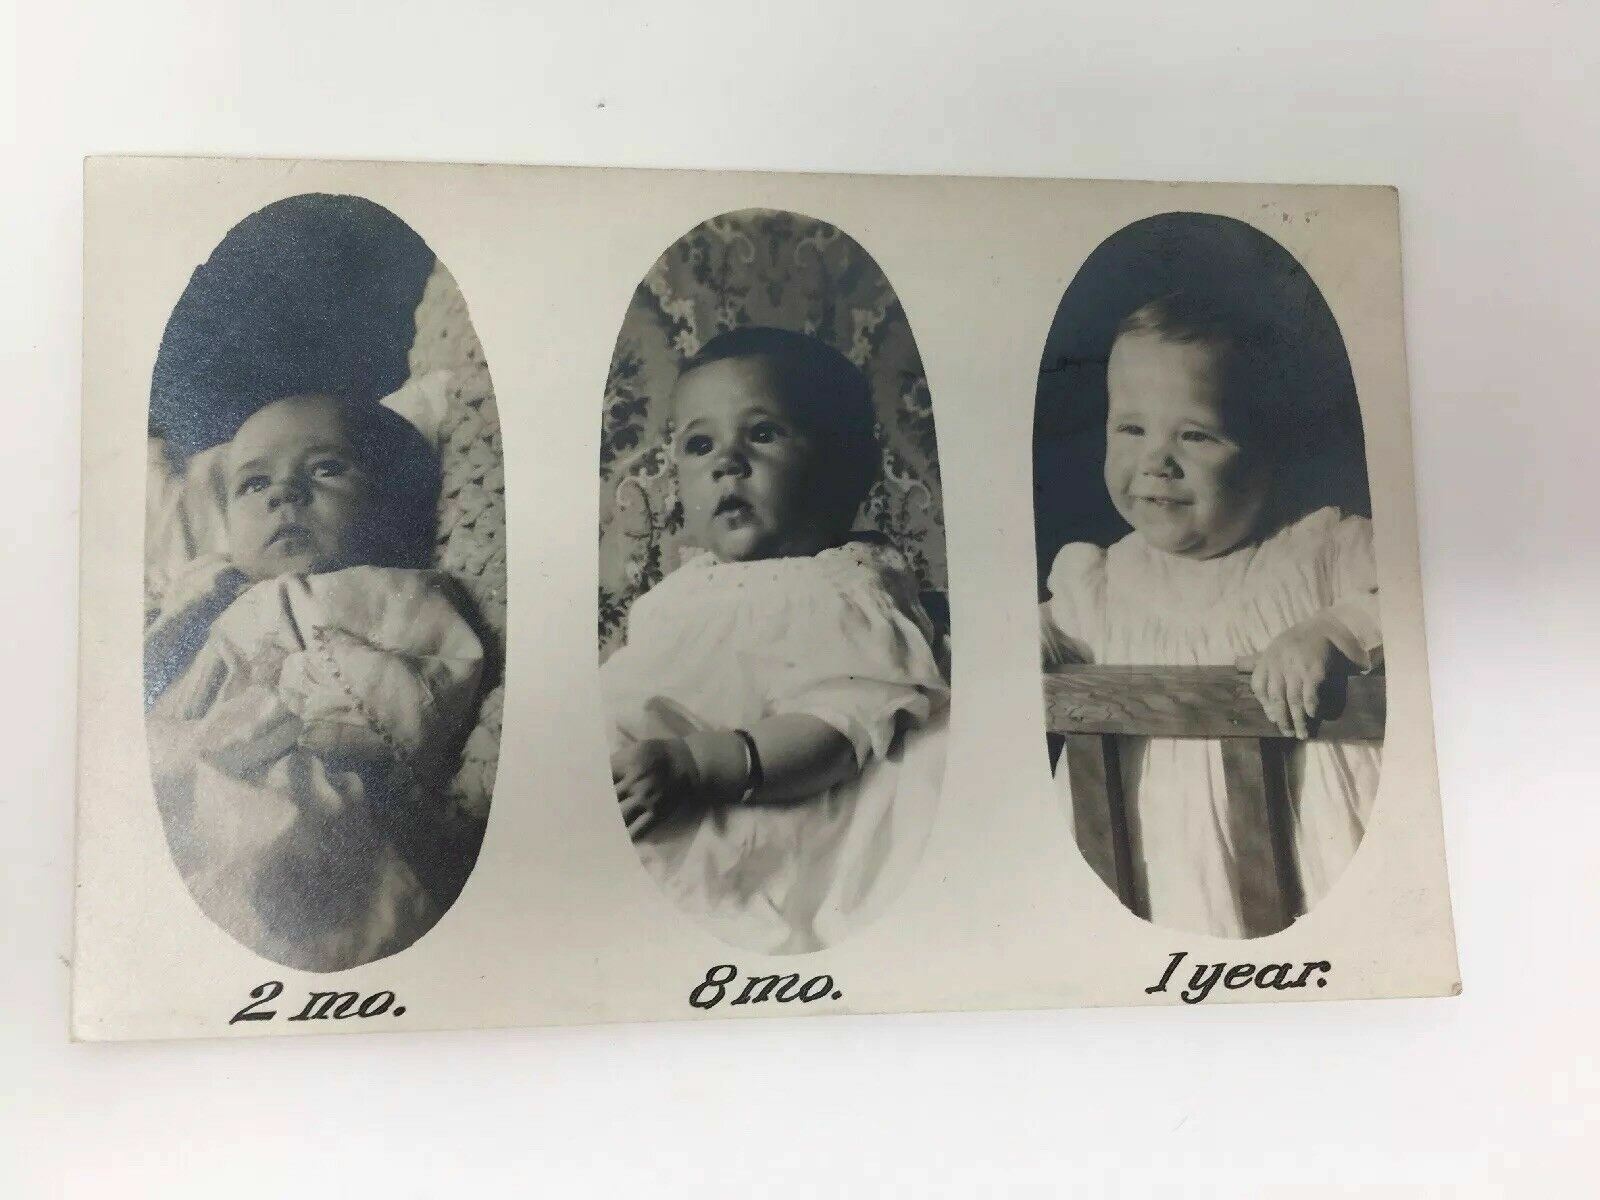 c. 1912 RPPC Cyko Baby Real Photos 2 mo 8 mo 1 year